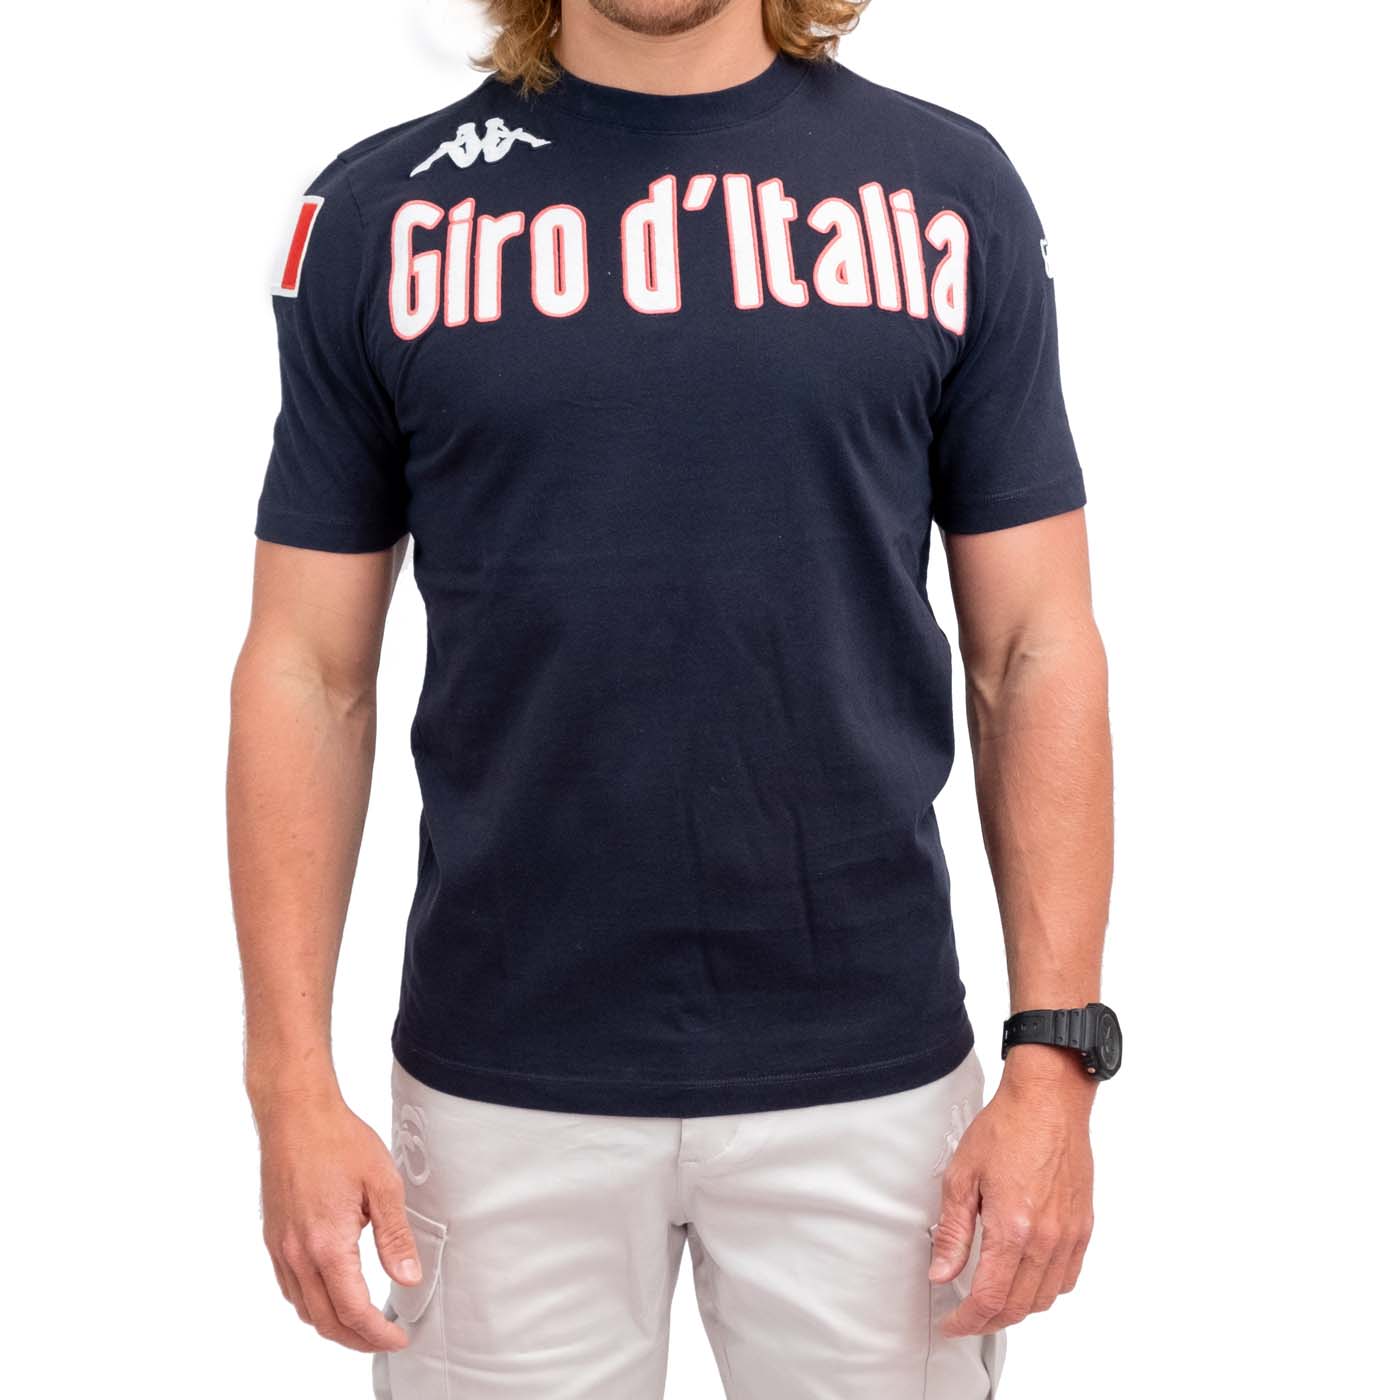 Giro d'Italia T-Shirt Eroi - Blau